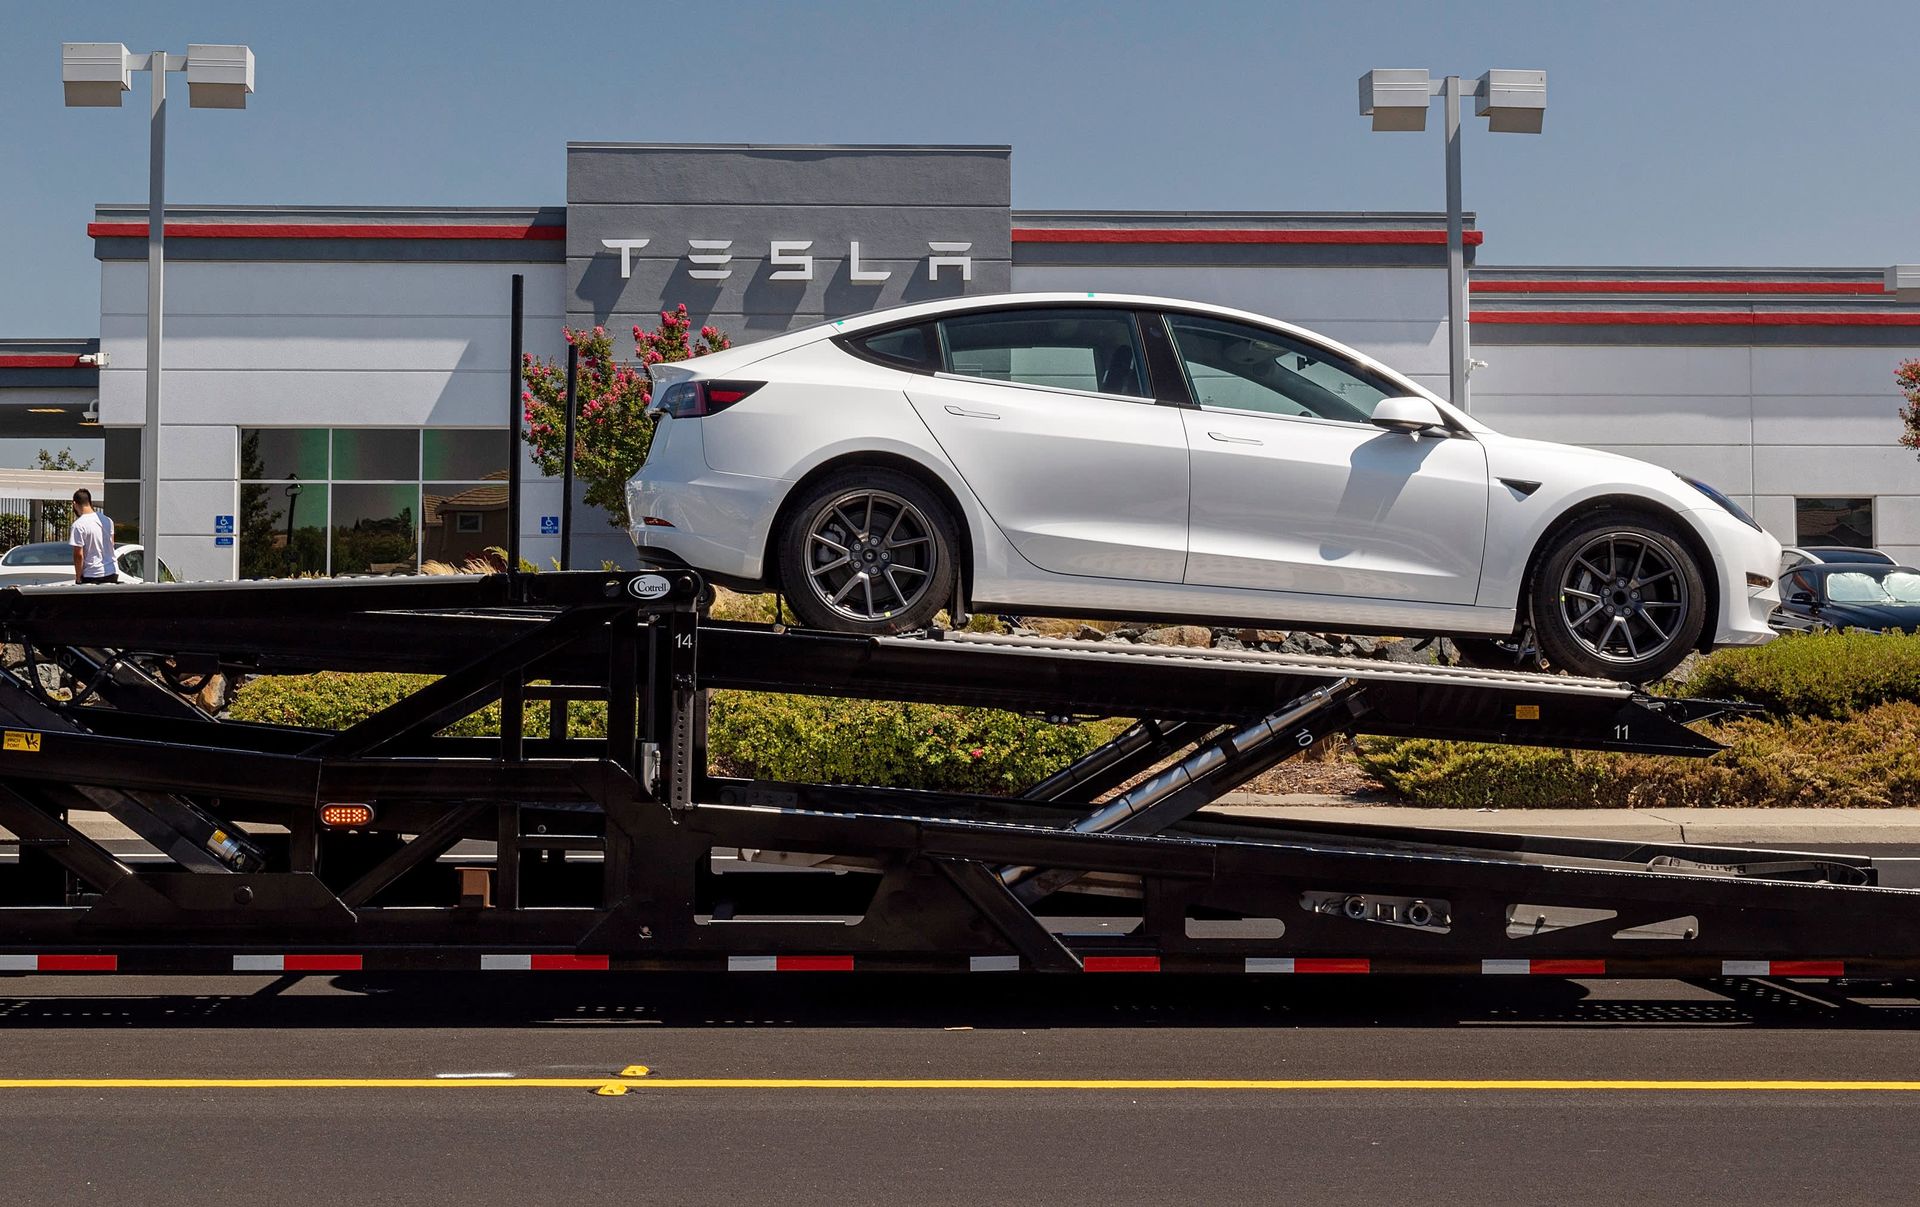 Tesla recalls vehicles